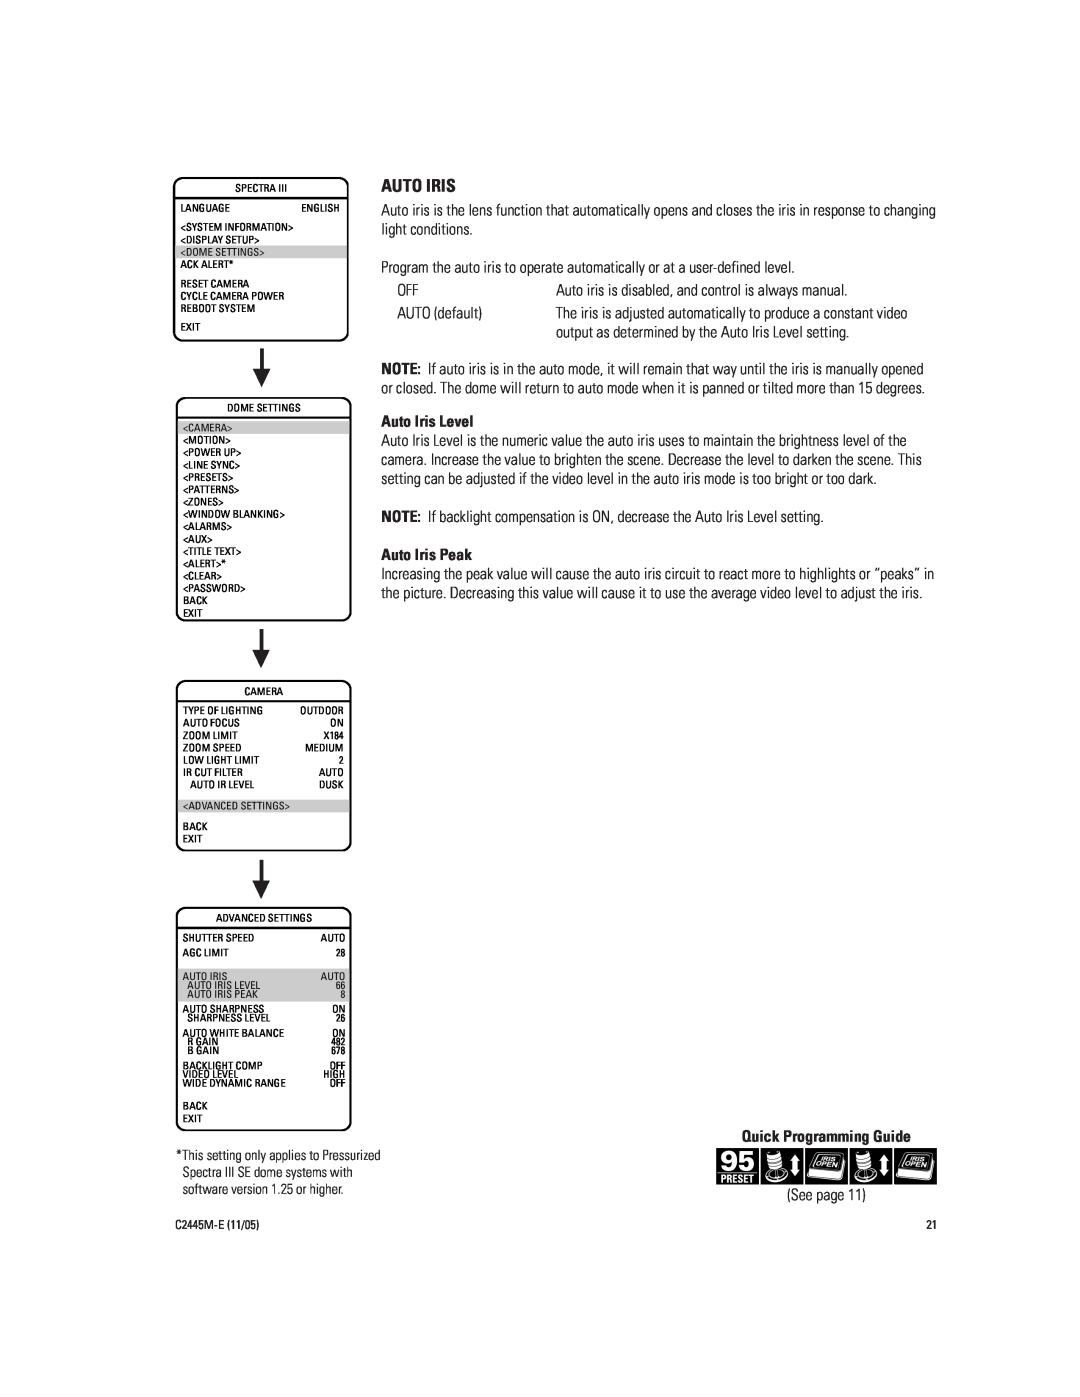 Pelco DD53CBW-X manual Auto Iris Peak, Quick Programming Guide 